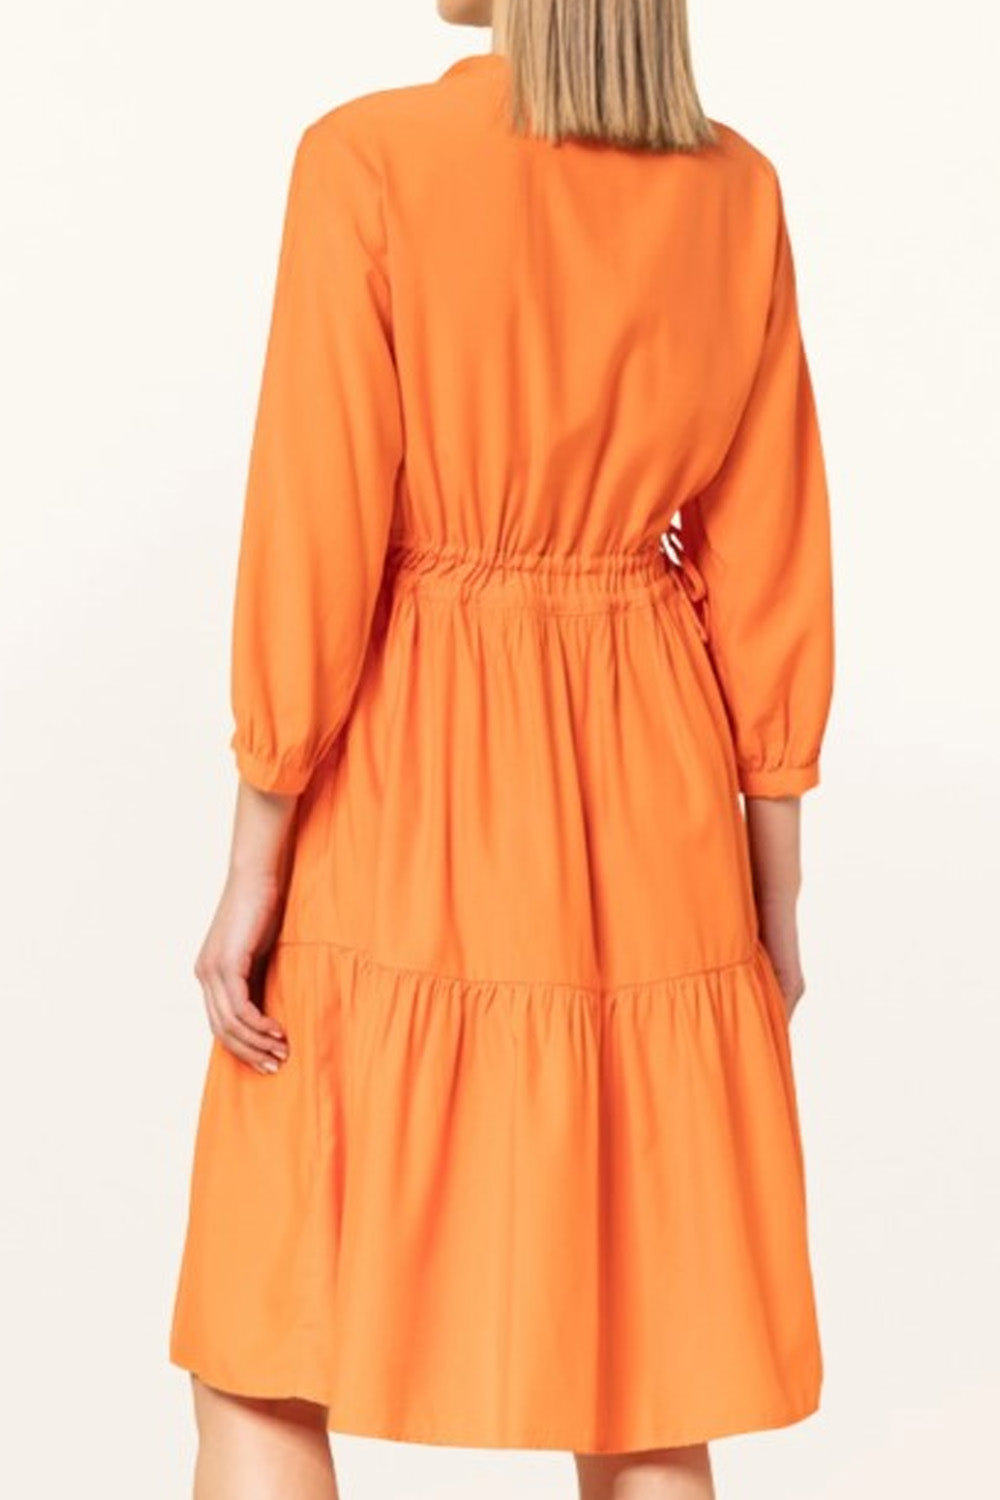 Bountiful Orange Dress